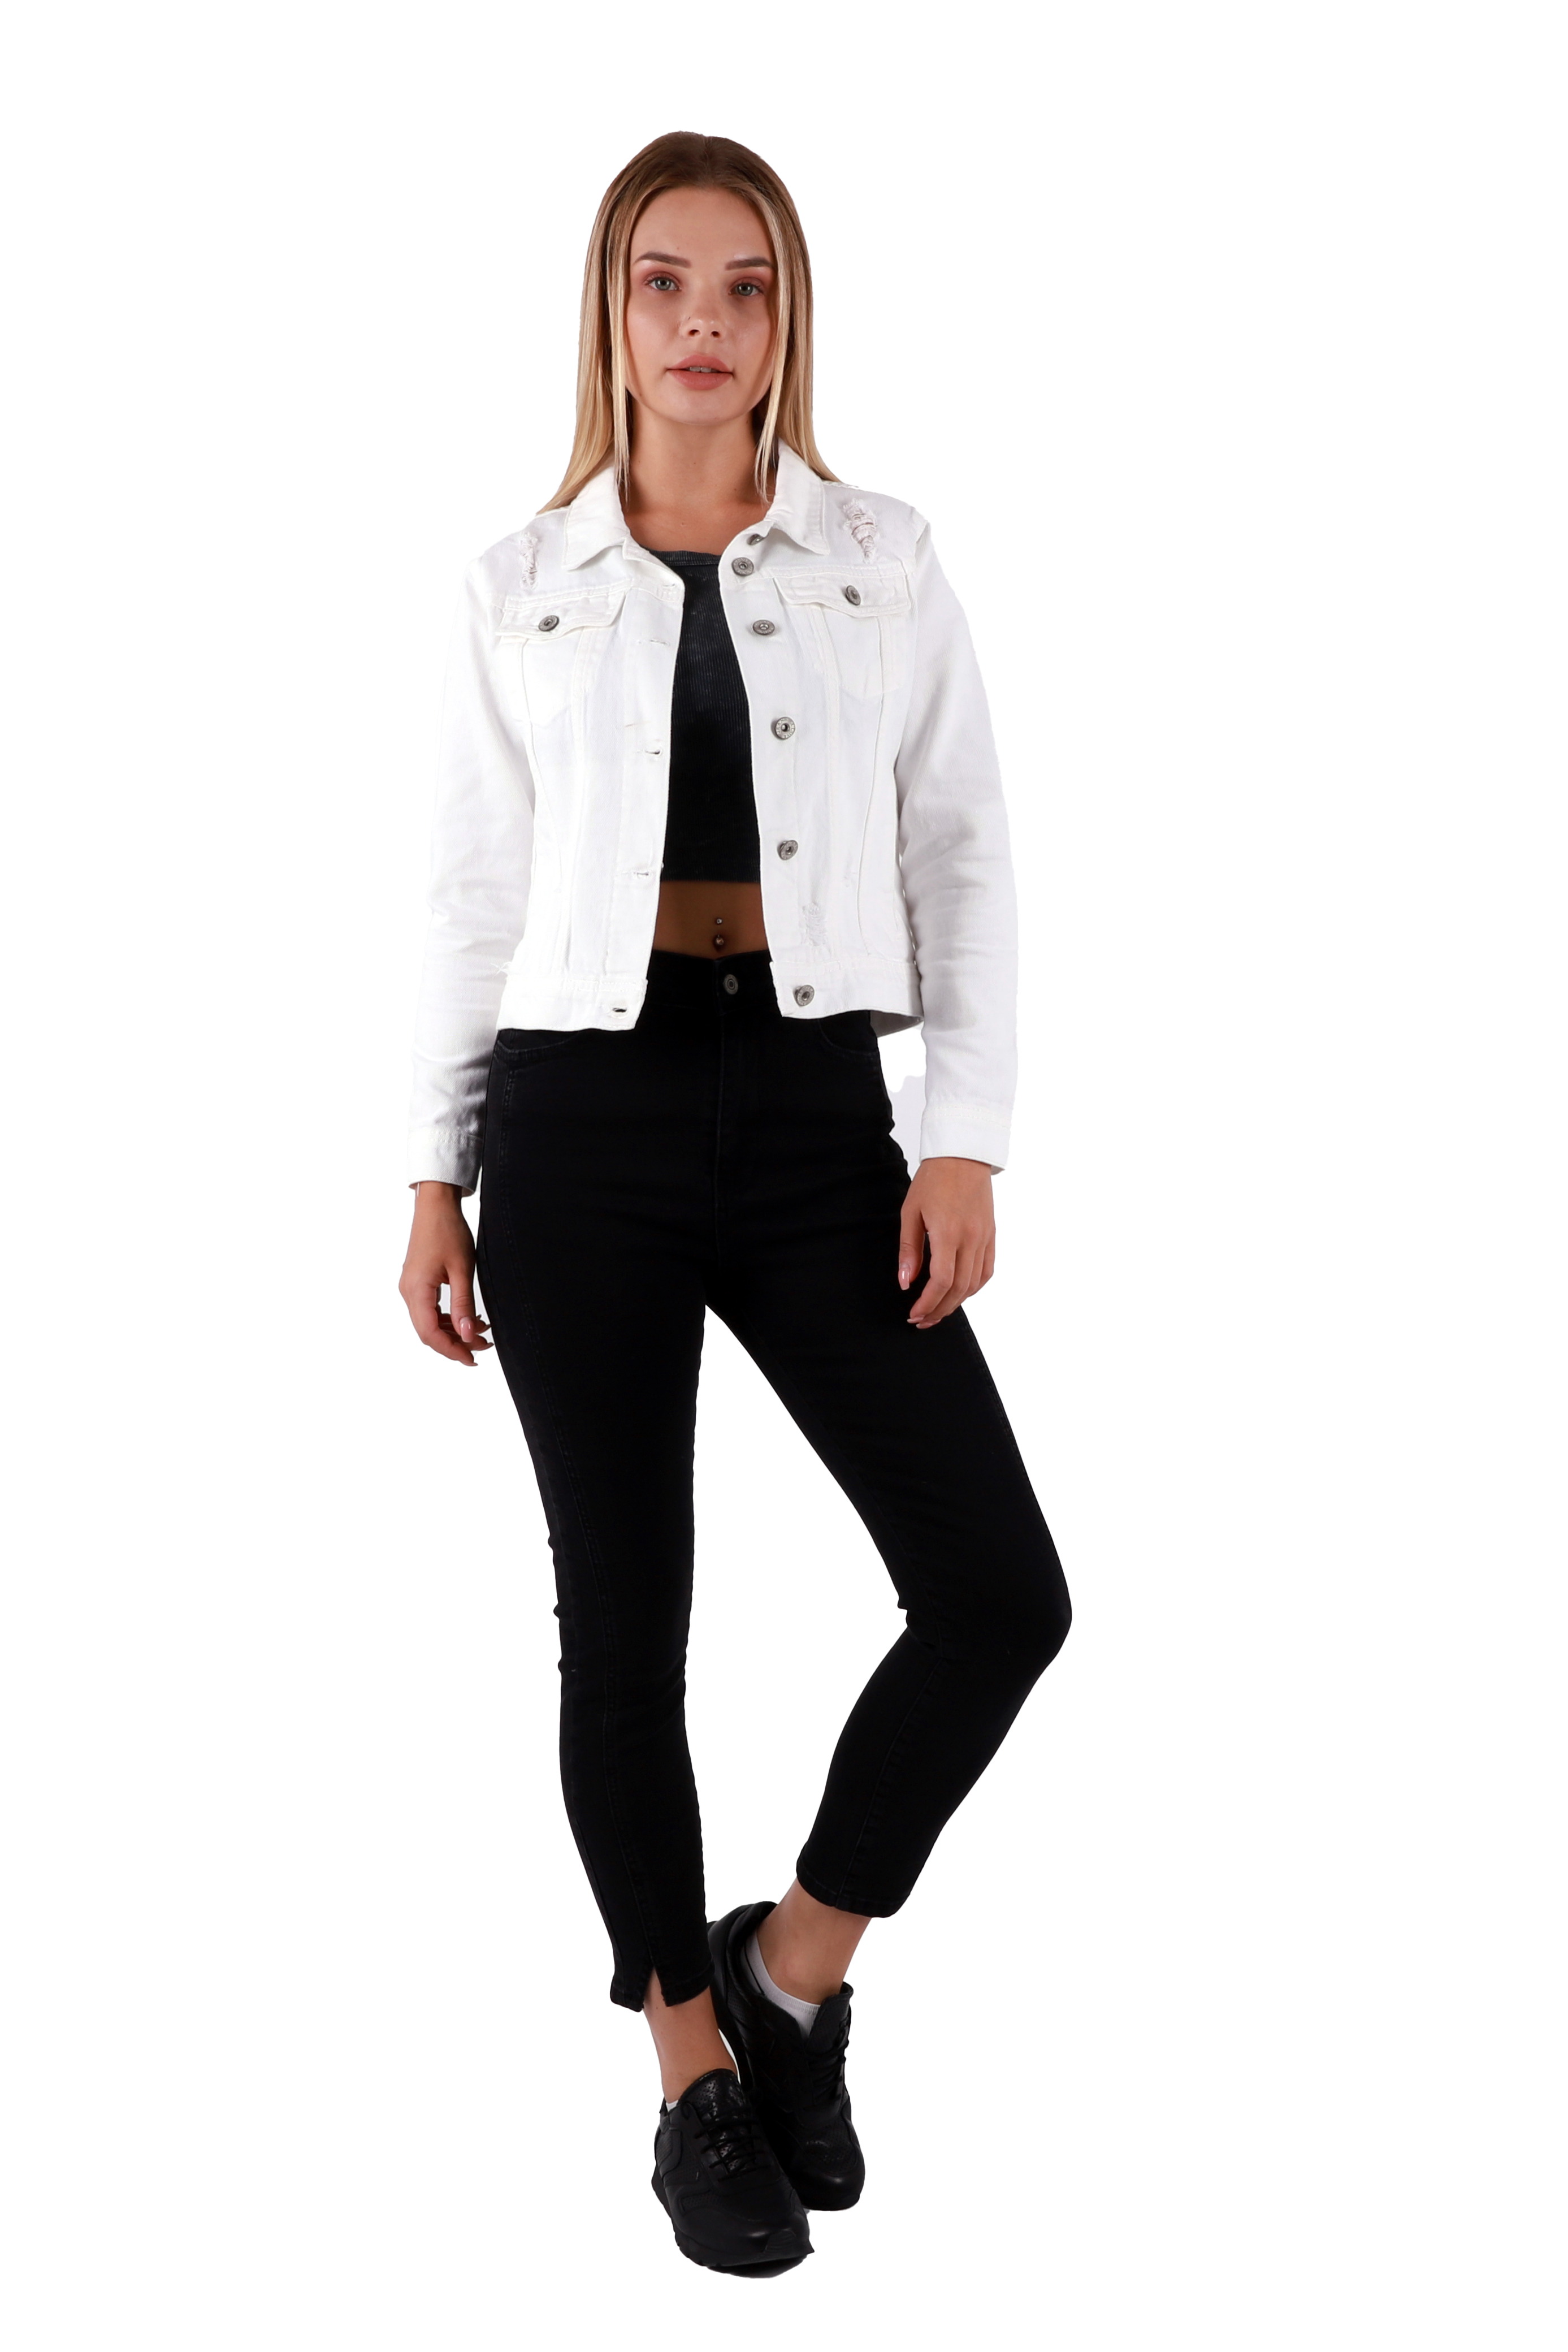 A model wears 37402 - Denim Jacket - White, wholesale Denim Jacket of XLove to display at Lonca